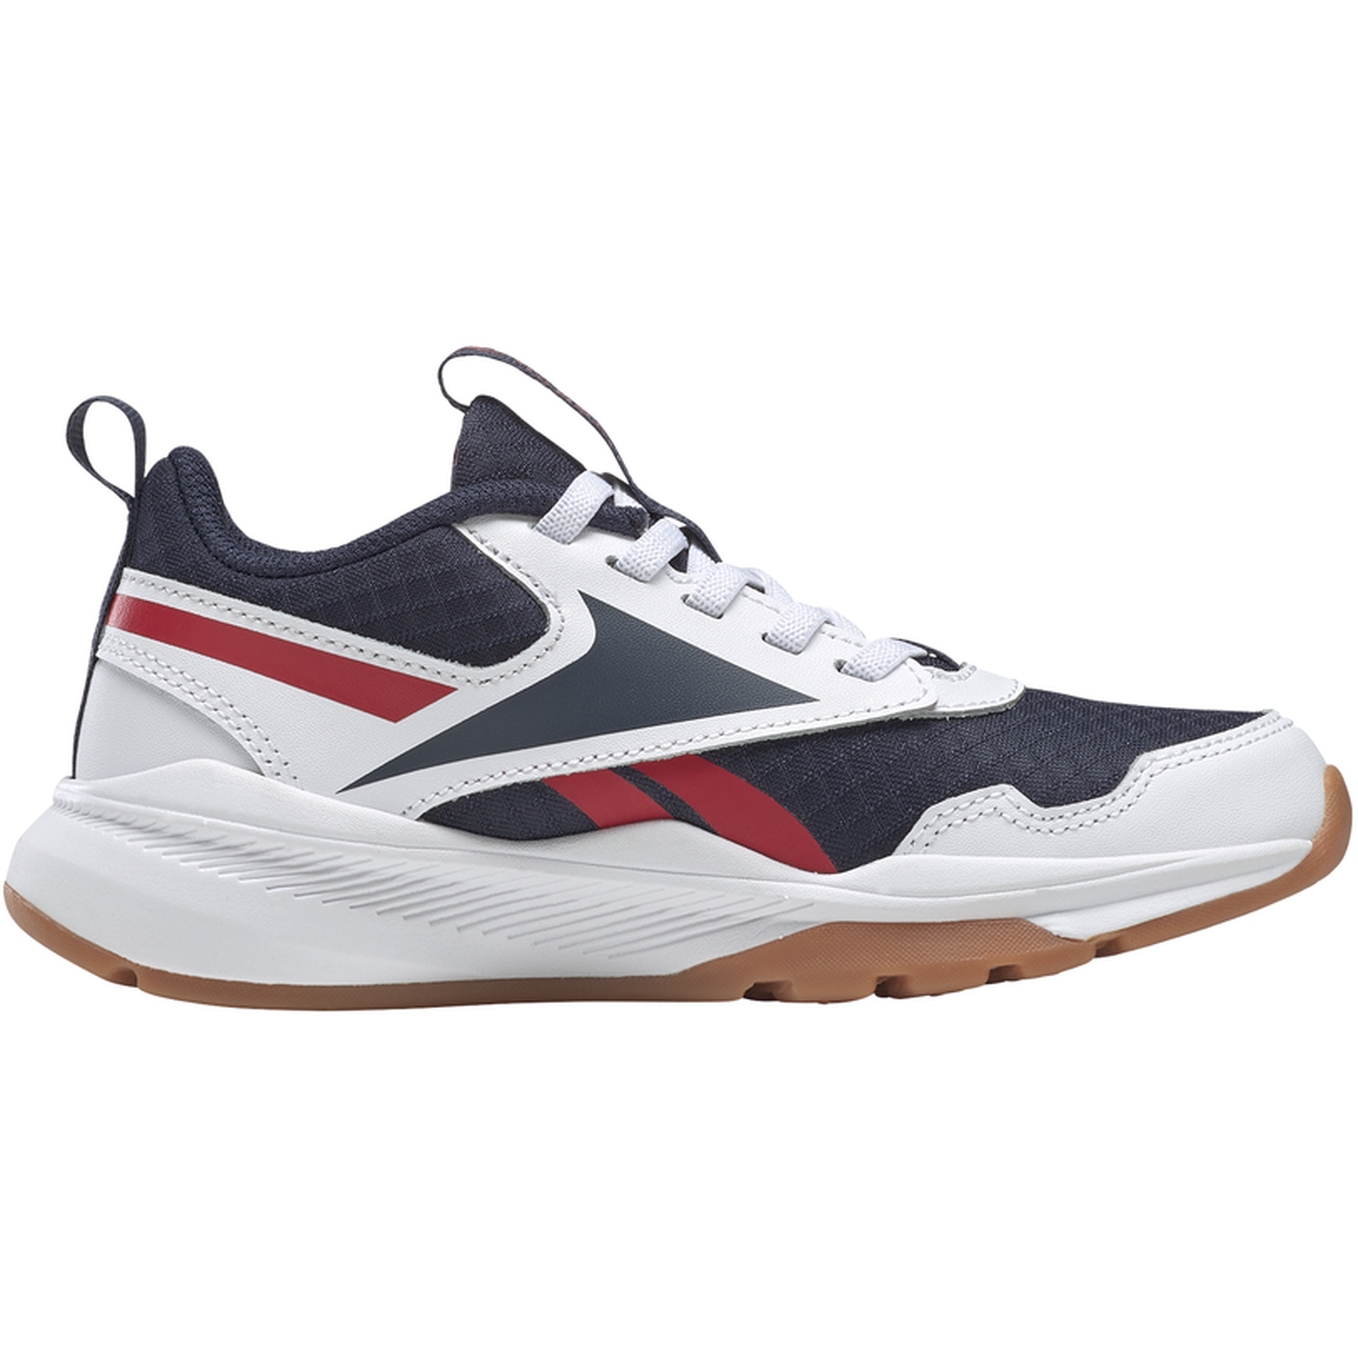 Reebok XT Sprinter 2 ALT Kinder Sneaker - white / vector navy / vector red